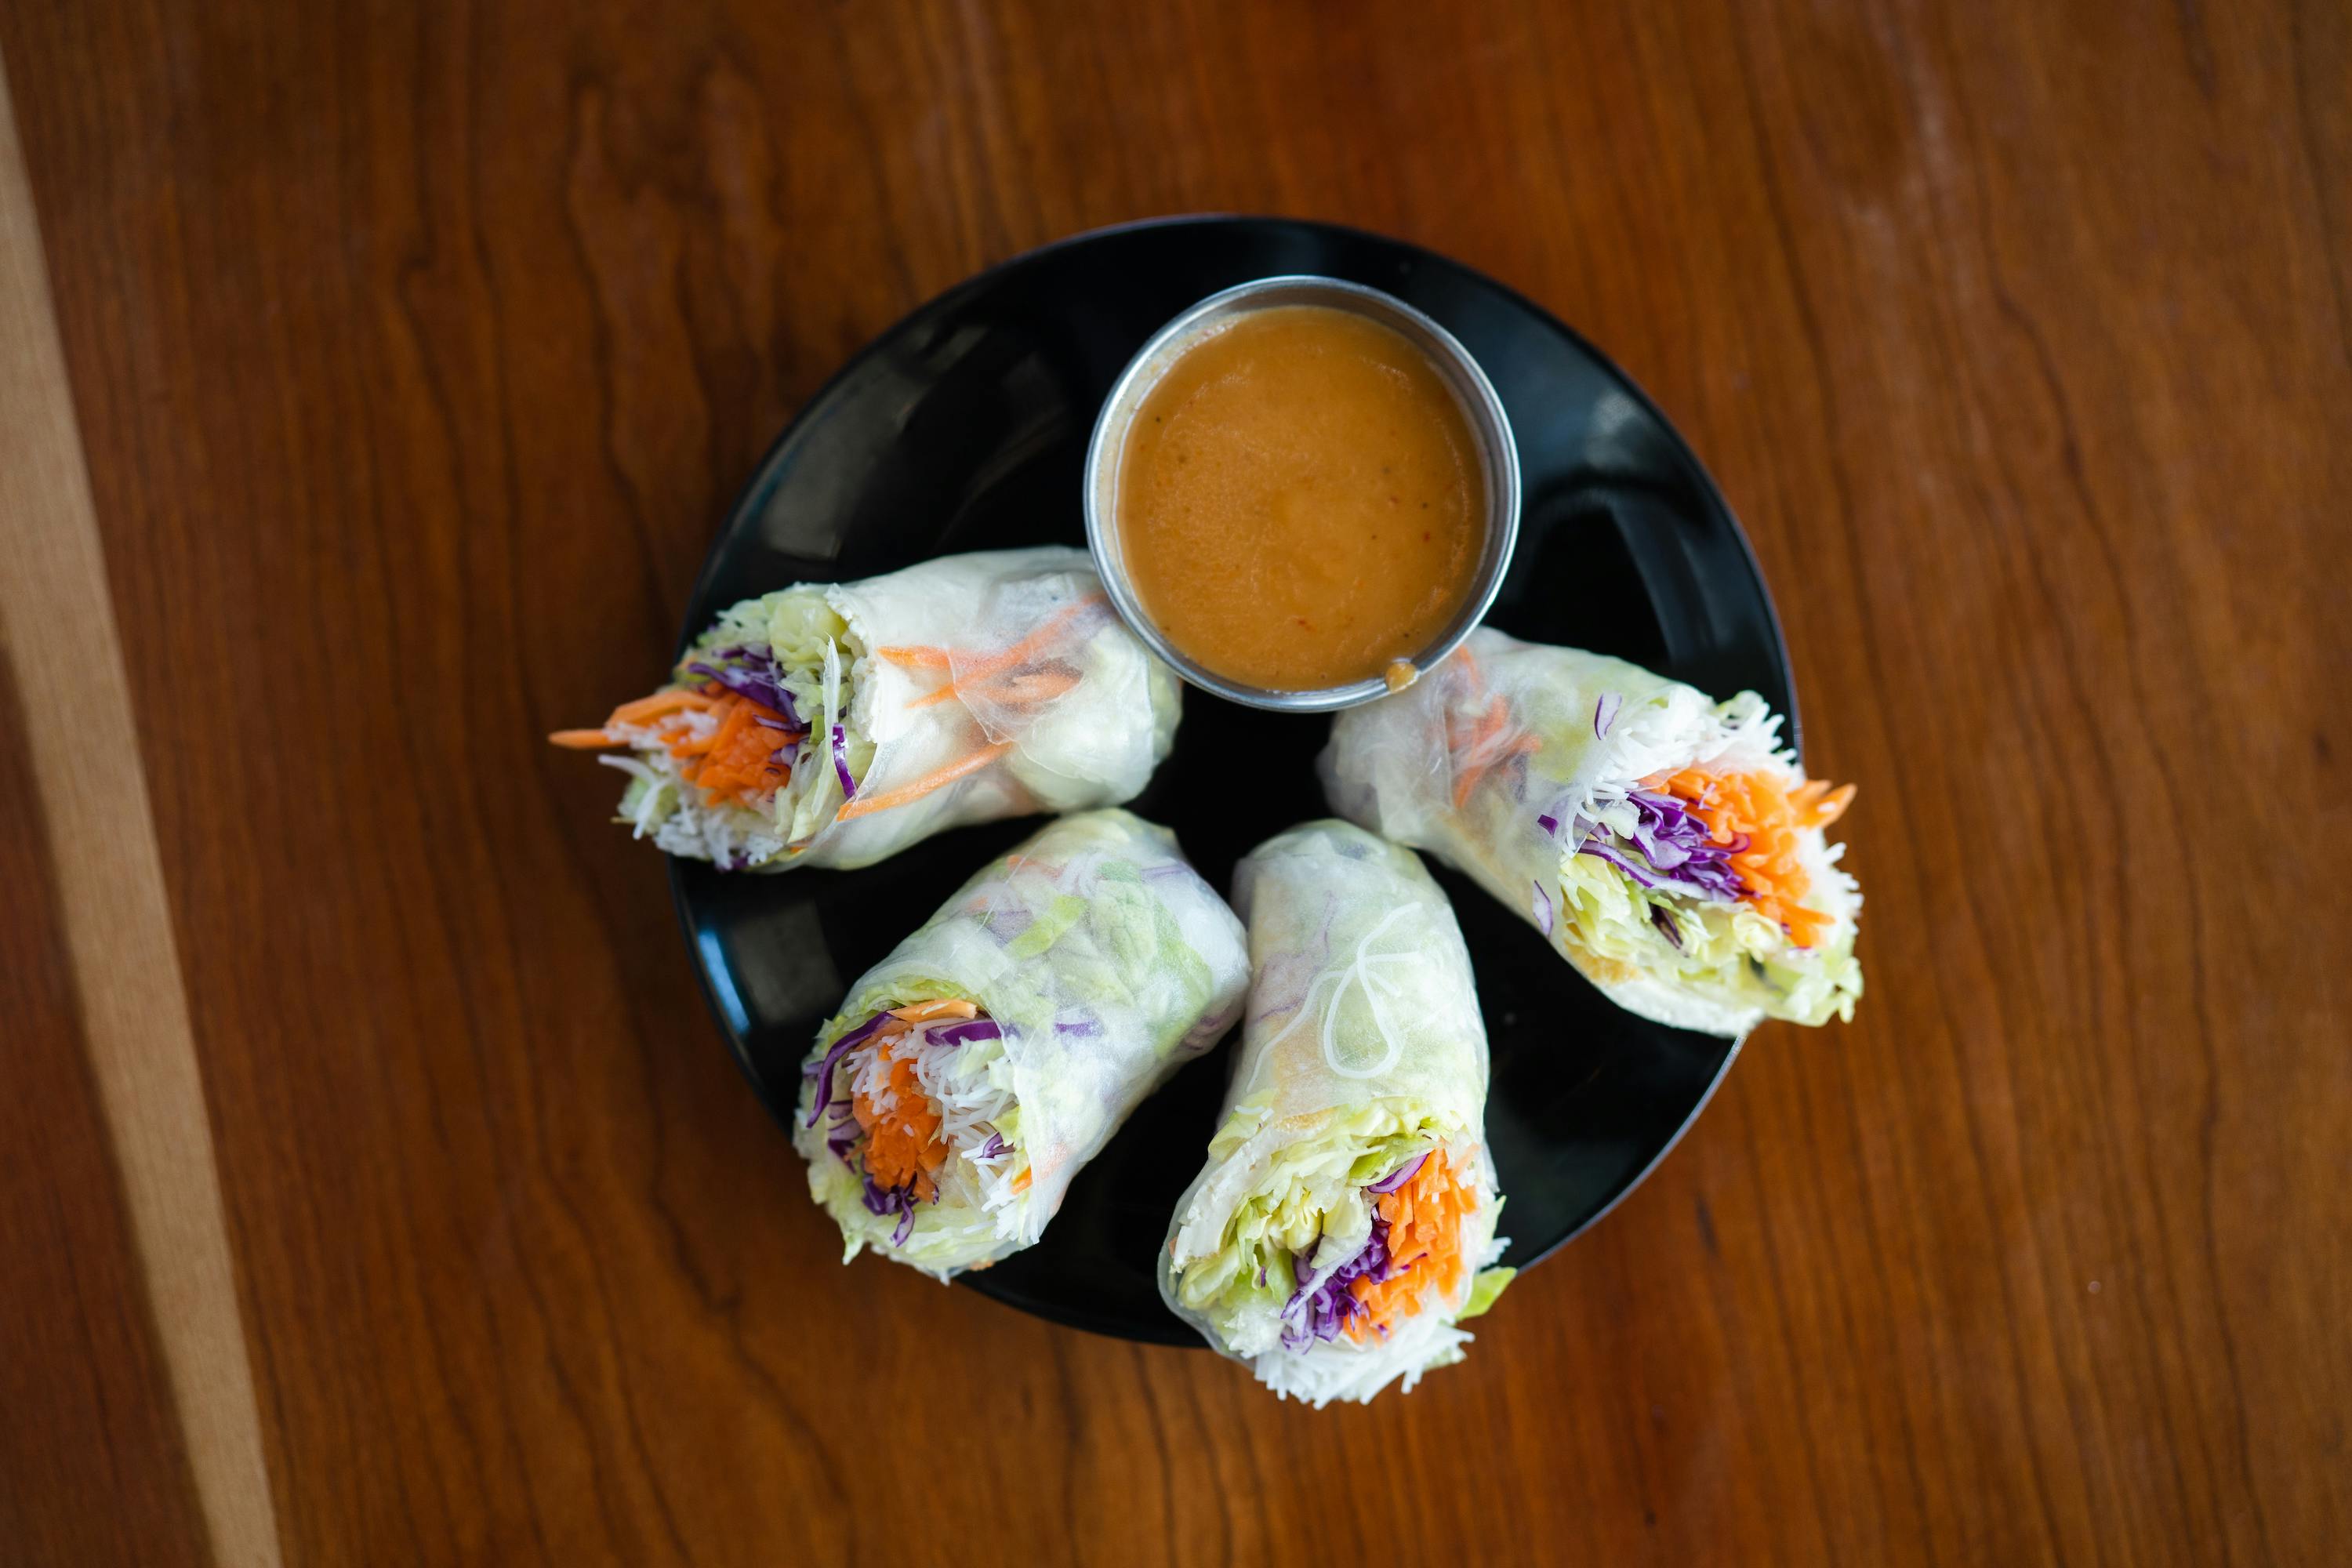 Fresh Garden Roll from City Thai Cuisine in Portland, OR